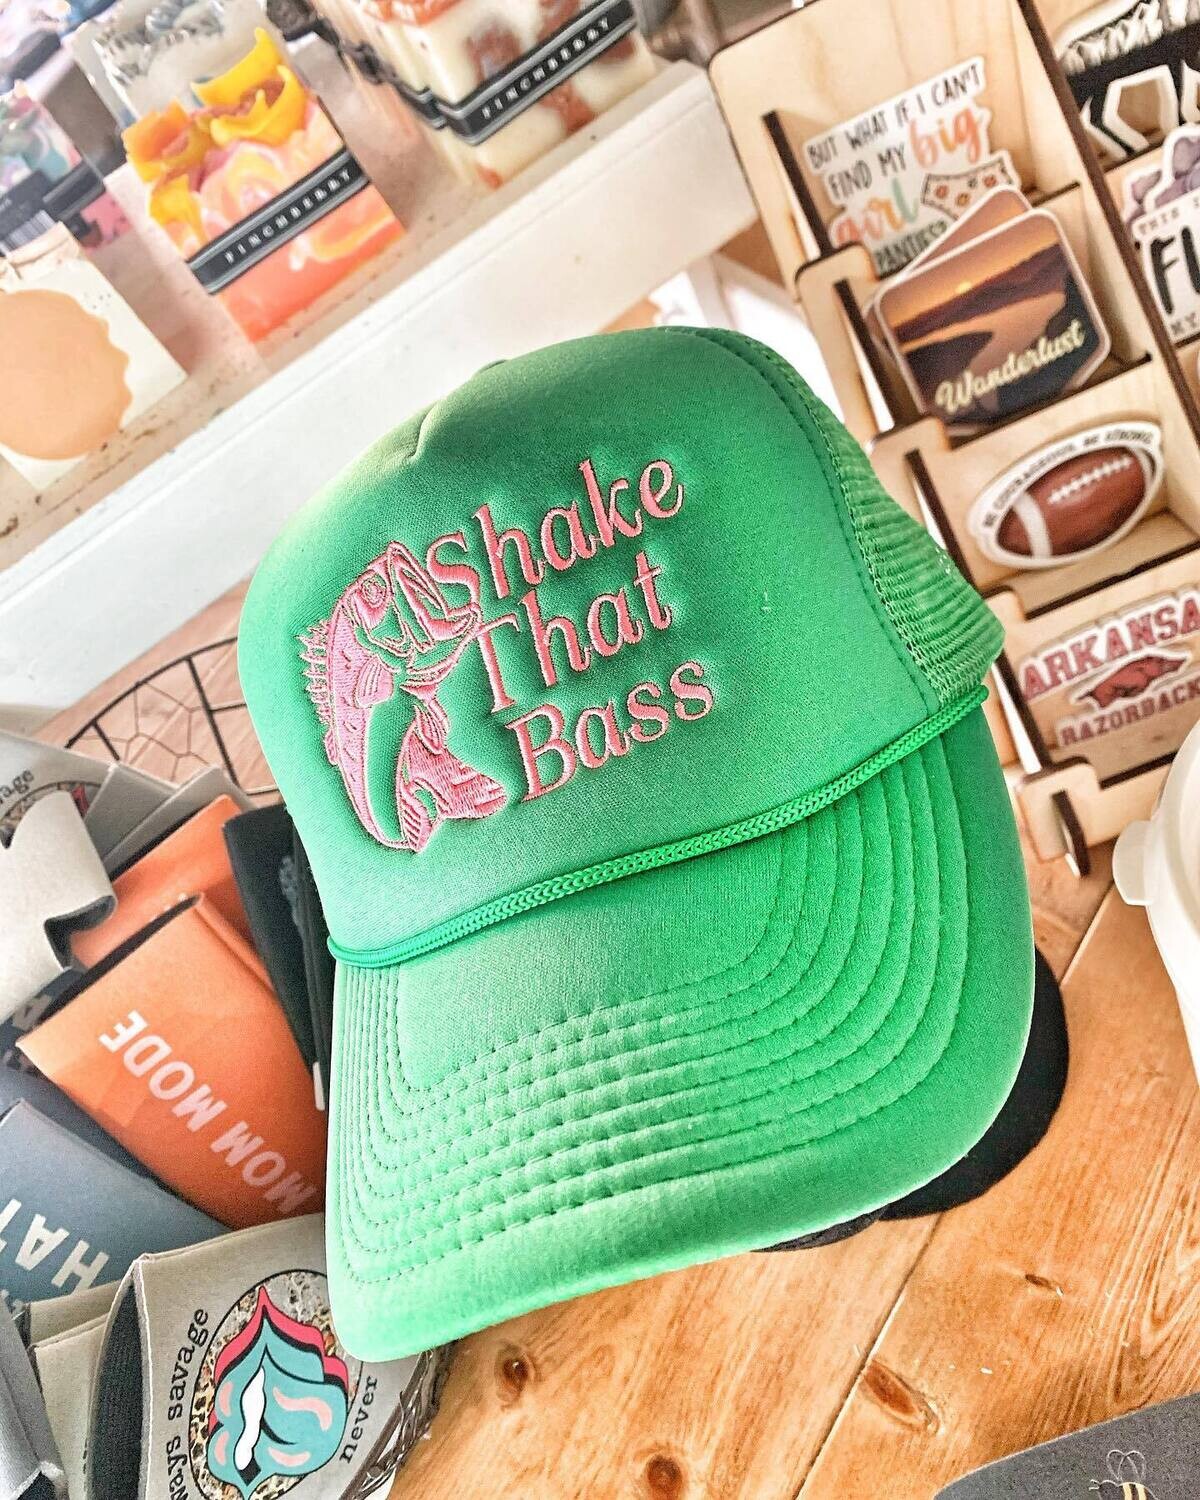 Shake That Bass Trucker Hat